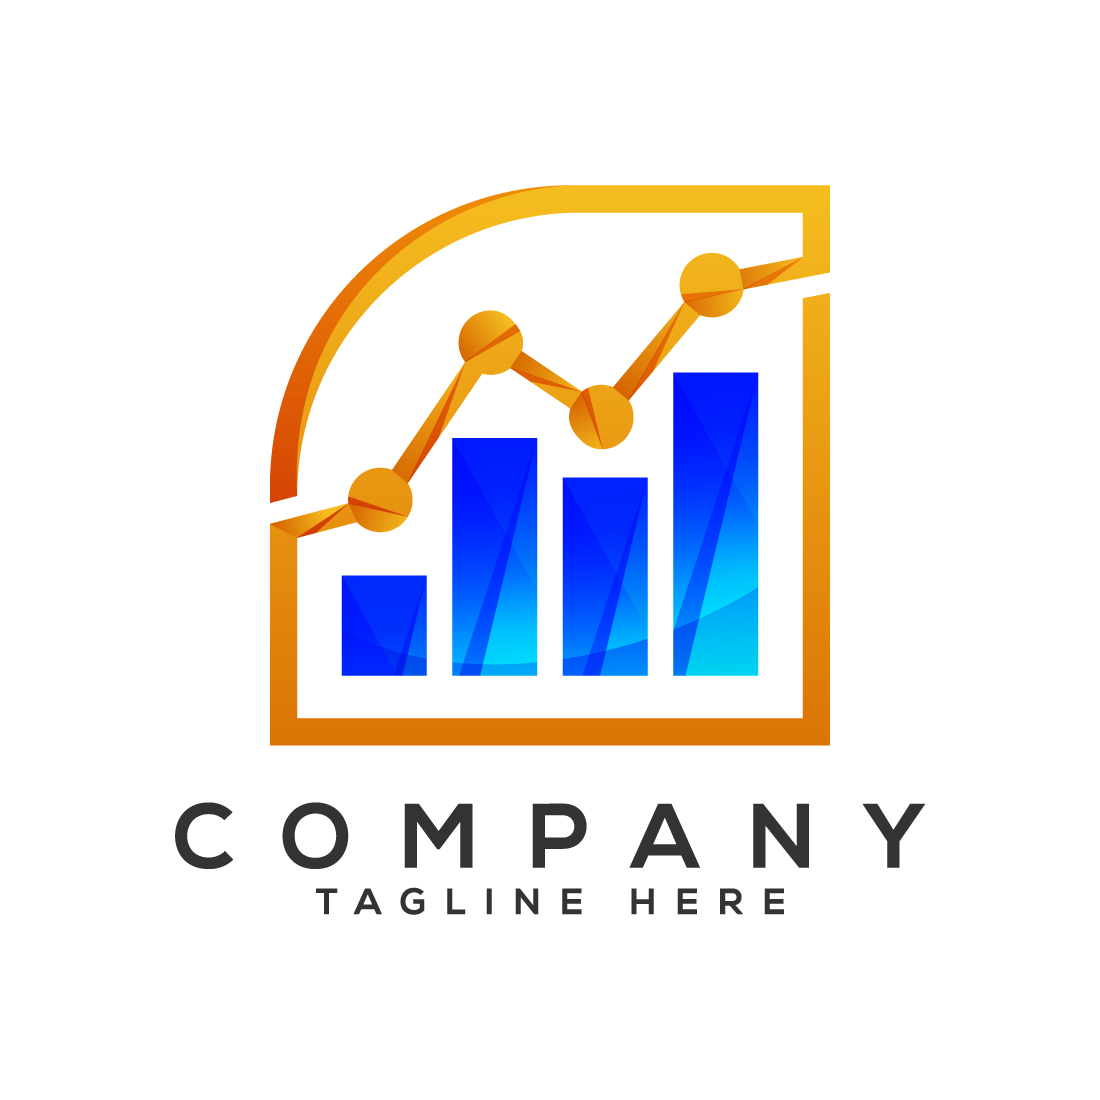 Accounting financial gradient logo, Financial Advisors logo design vector preview image.